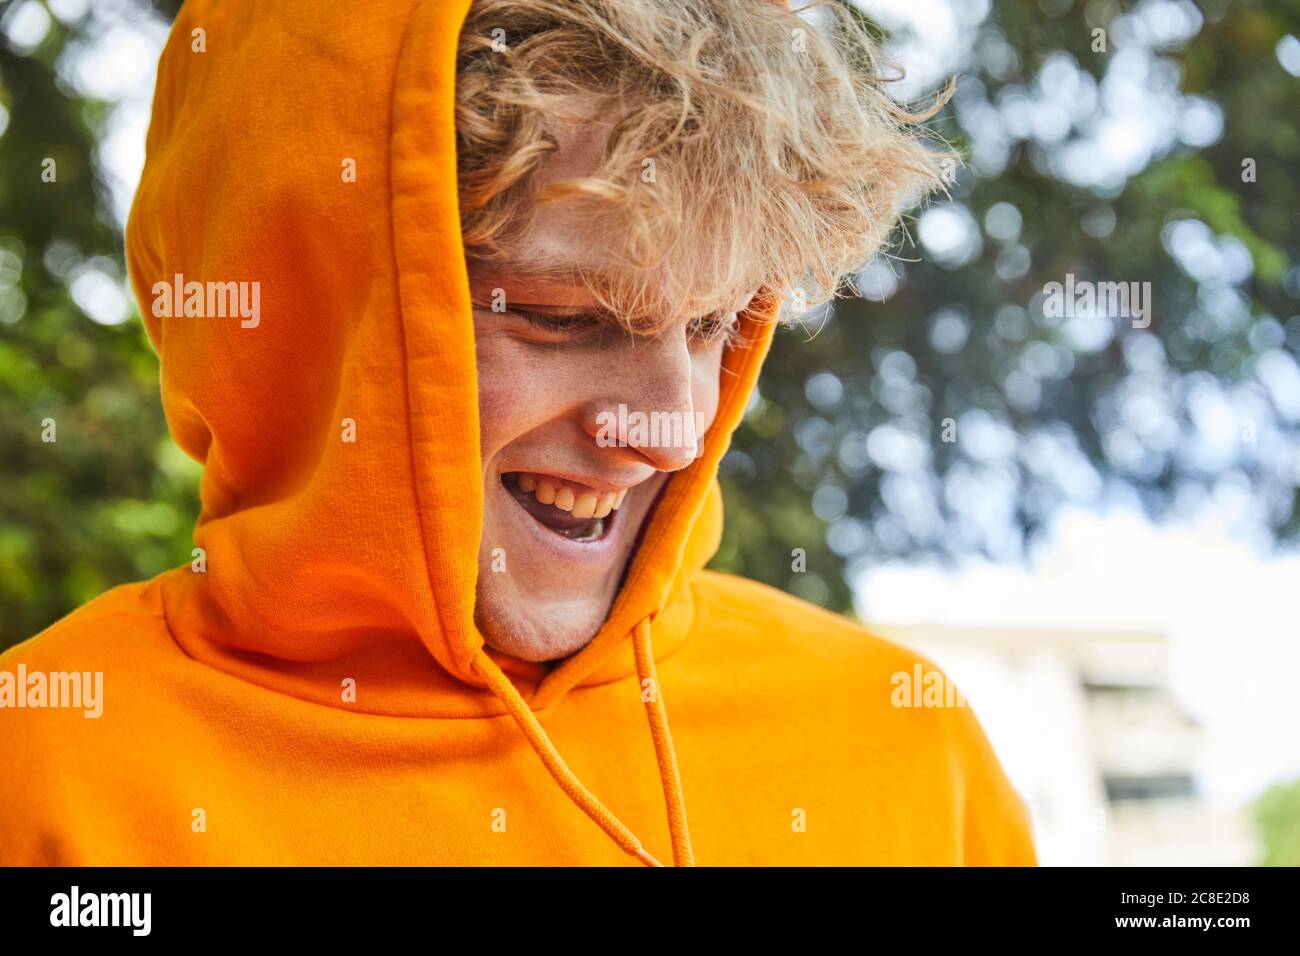 Portrait of laughing young man  wearing orange hoodie shirt Stock Photo